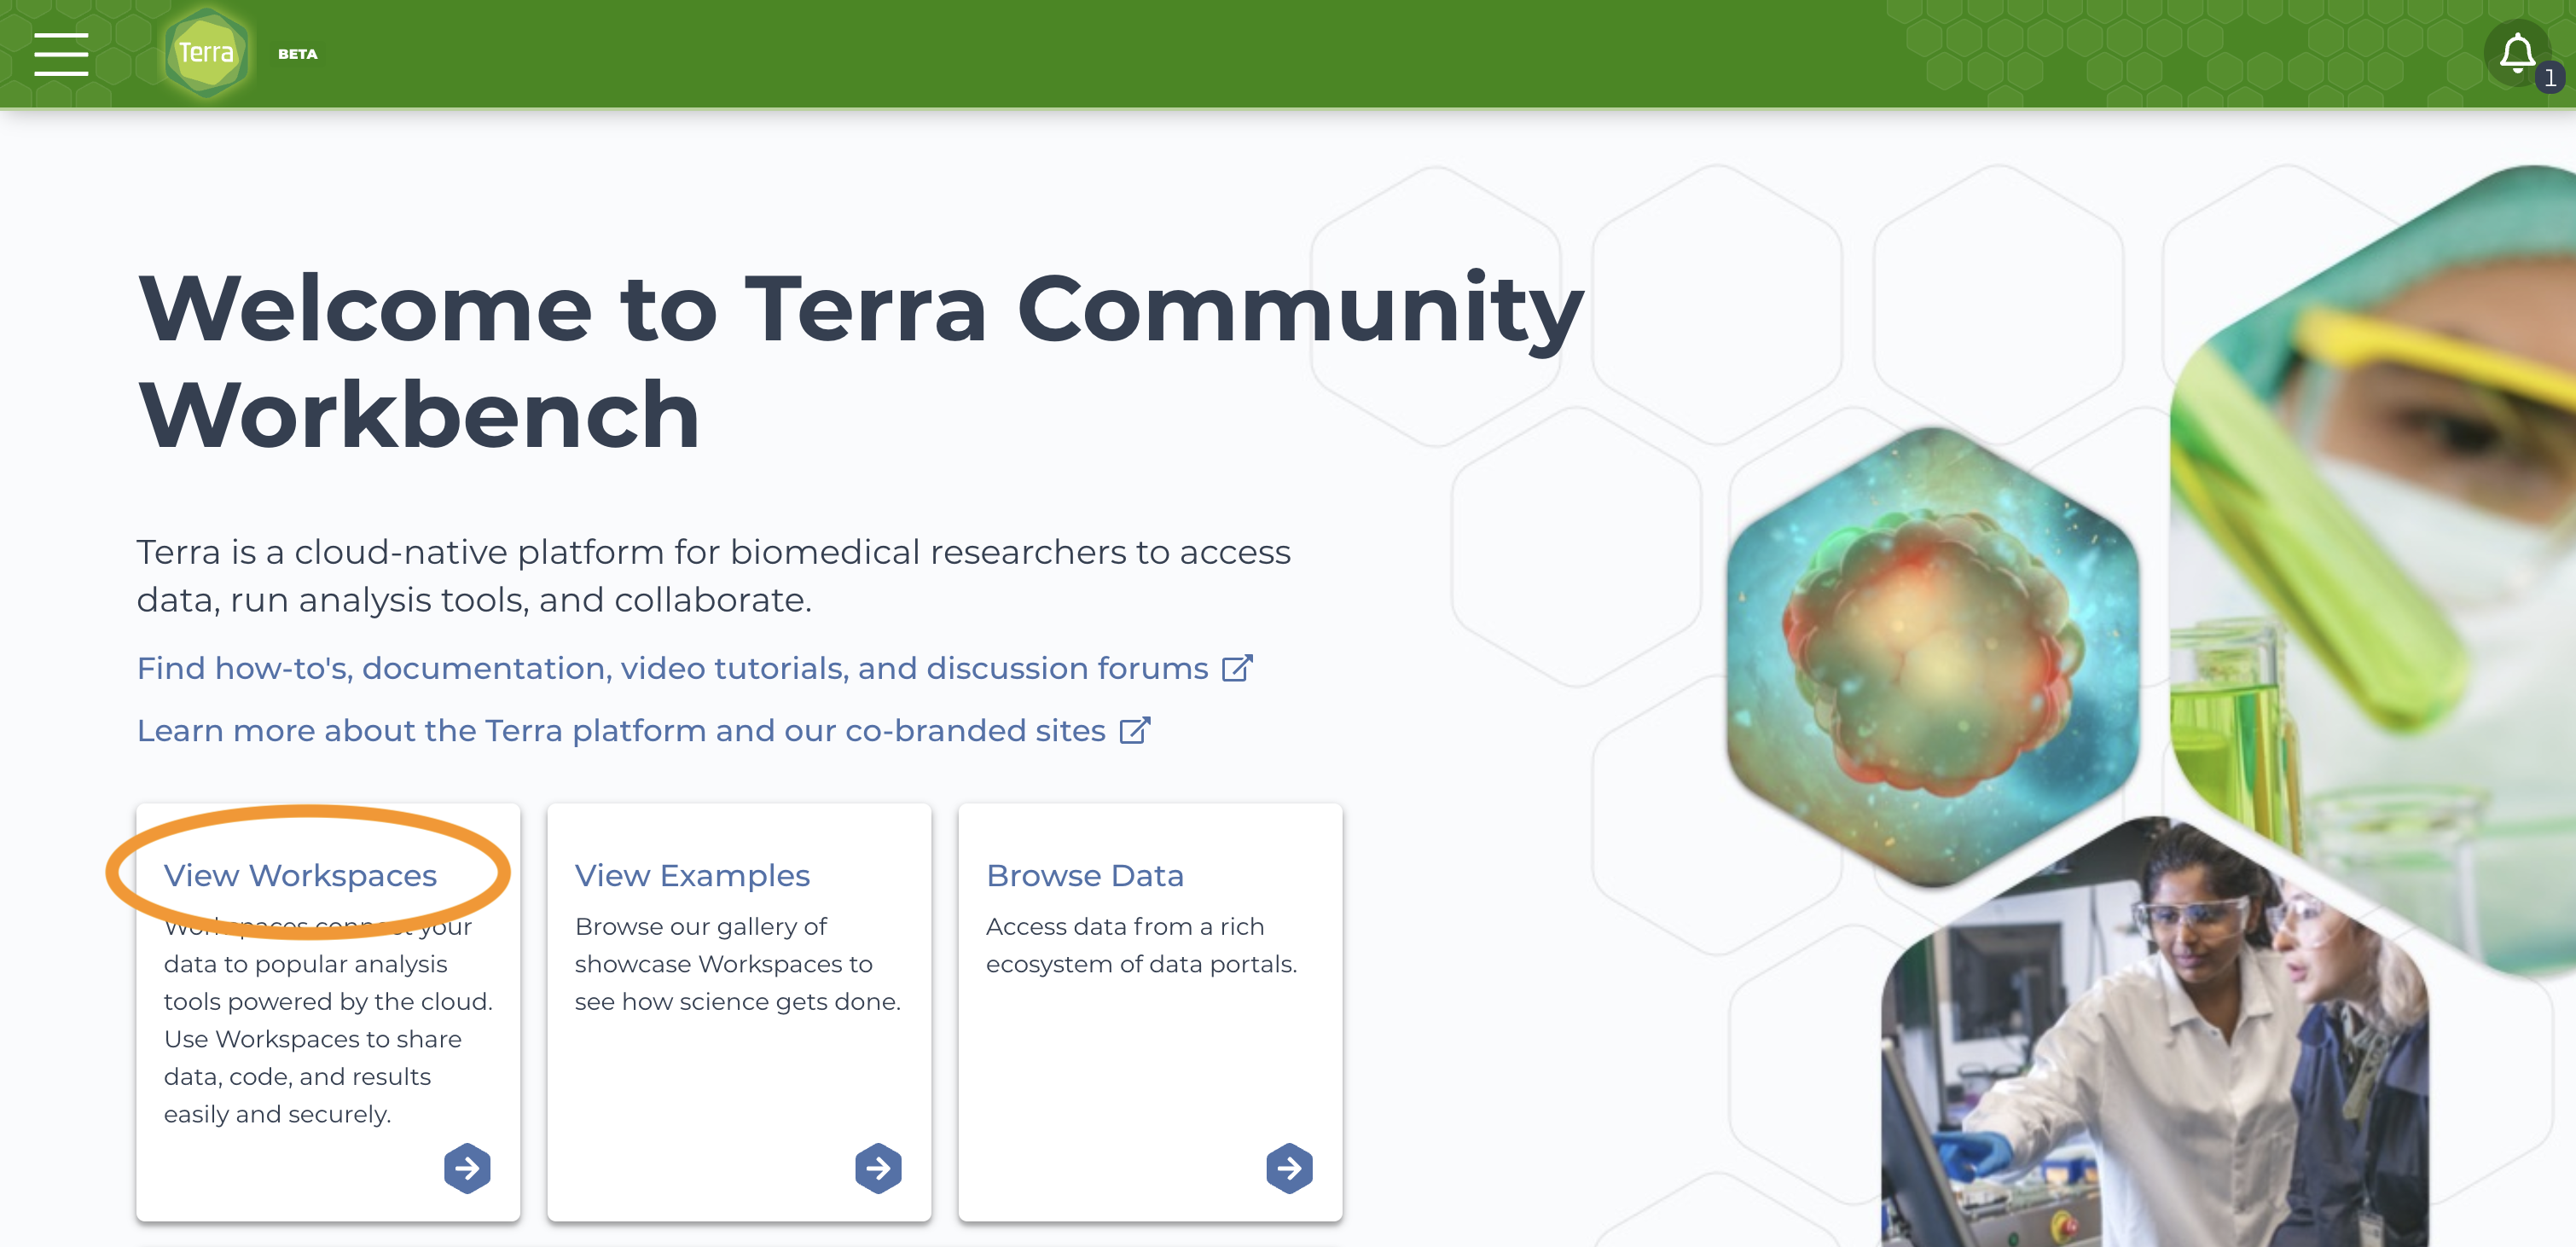 Terra-landing-page_View-Workspaces-card_Screenshot.png